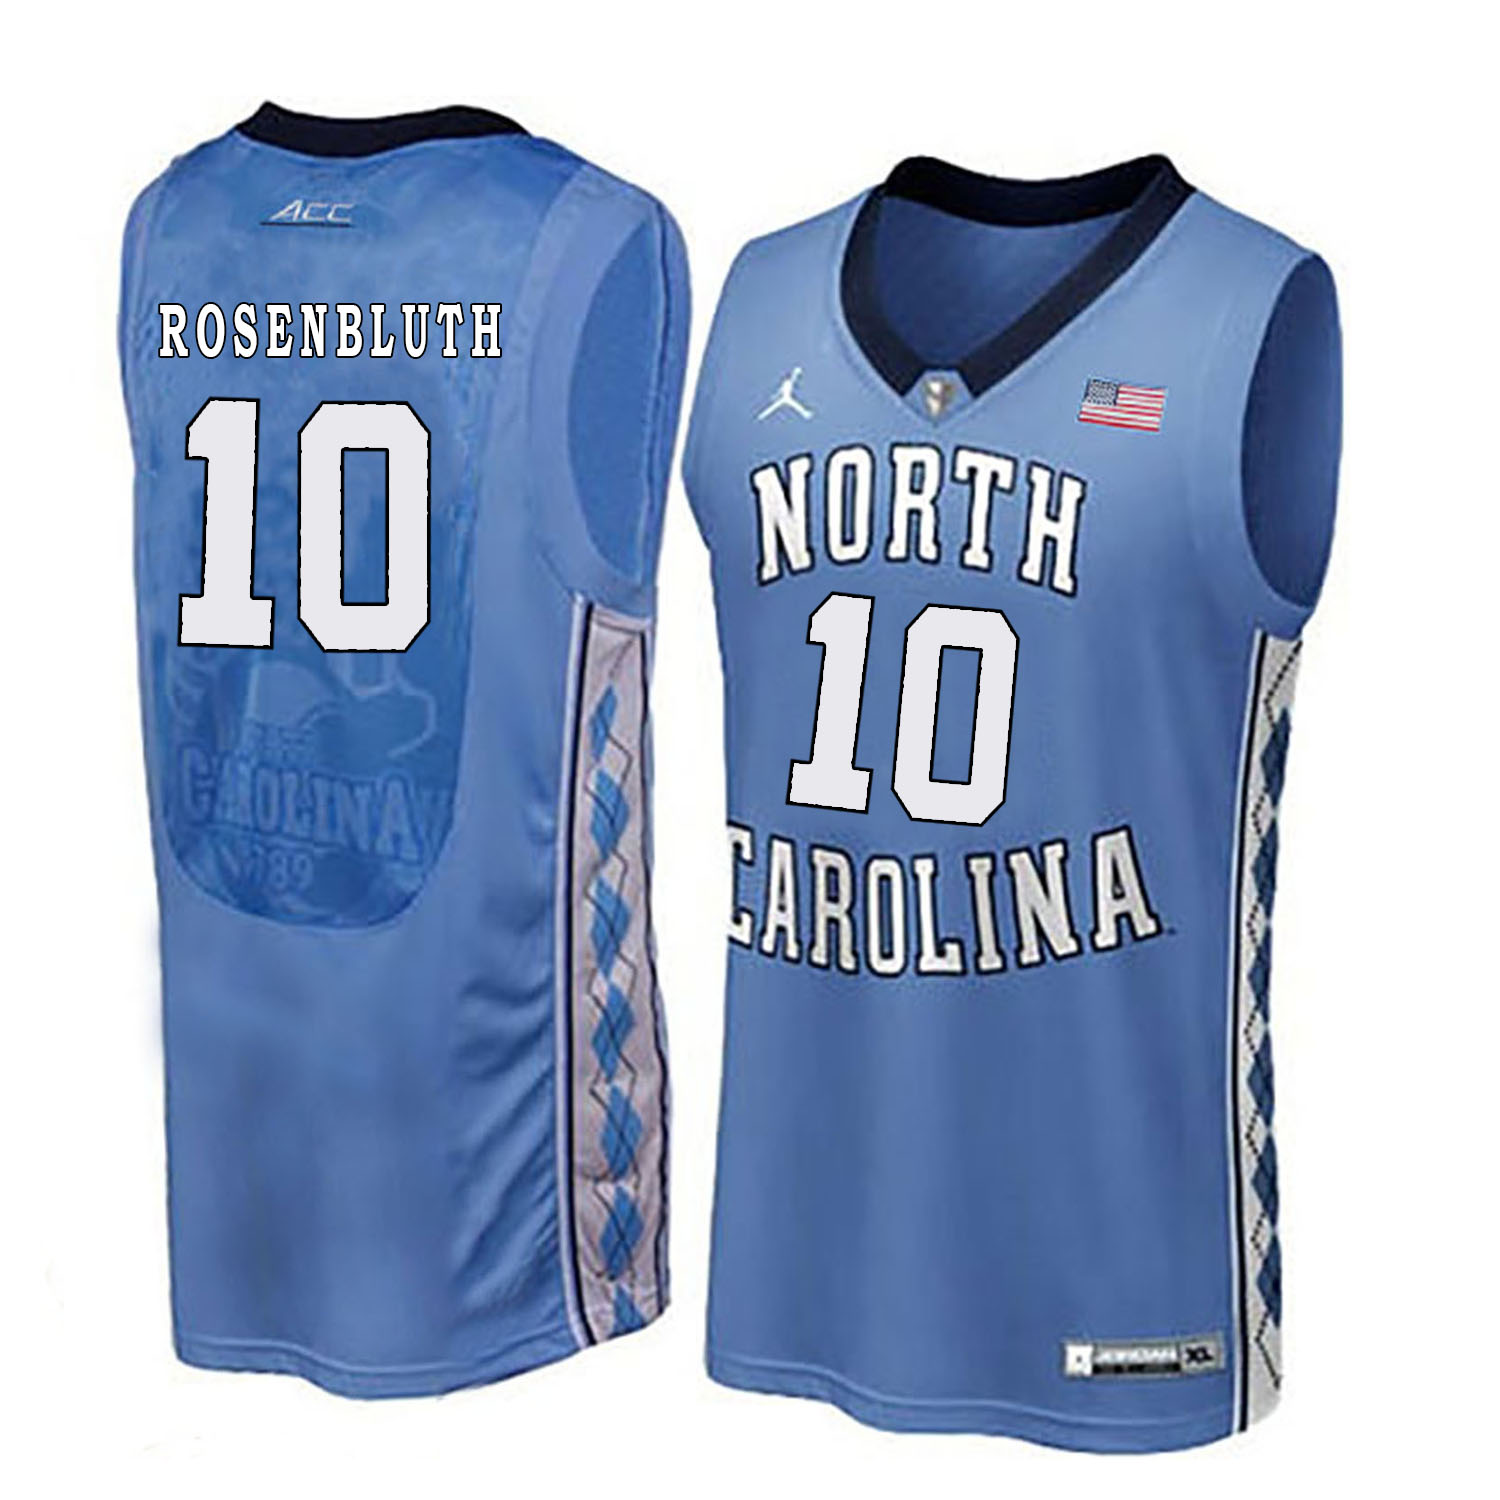 North Carolina Tar Heels 10 Lennie Rosenbluth Blue College Basketball Jersey